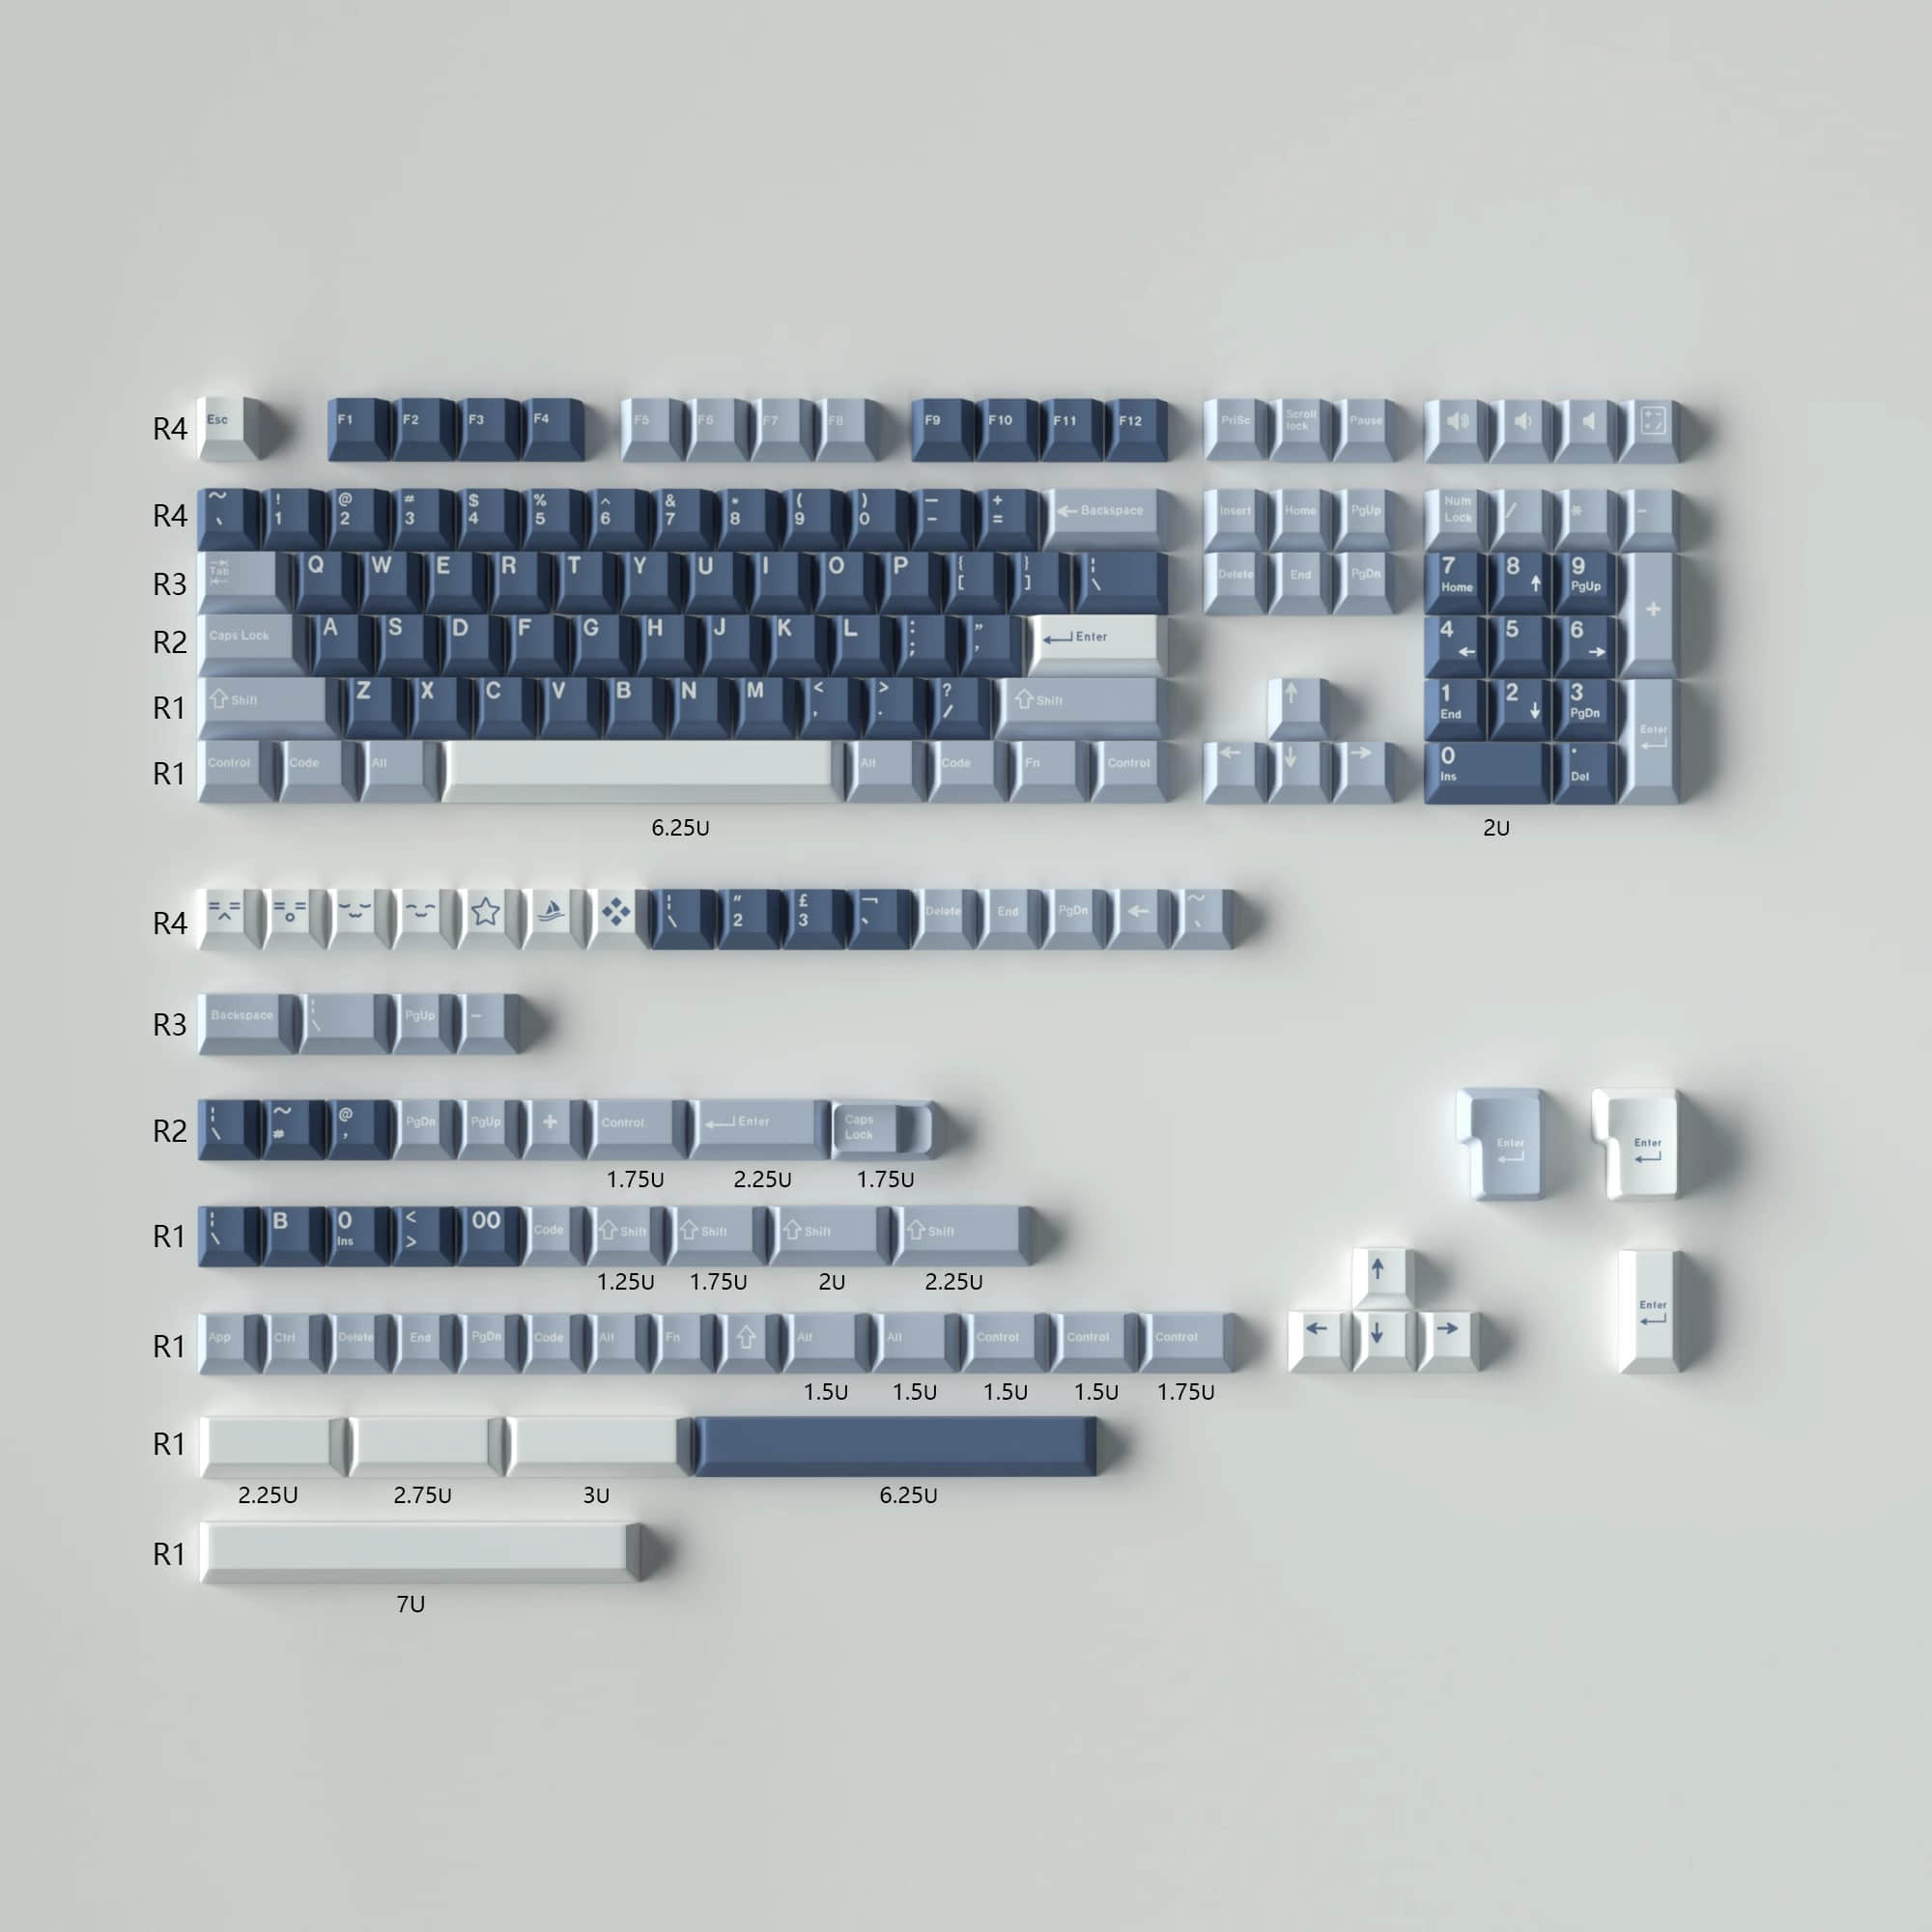 doubleshot-keycap-gray-blue-cherry-profile-ABS-keycaps